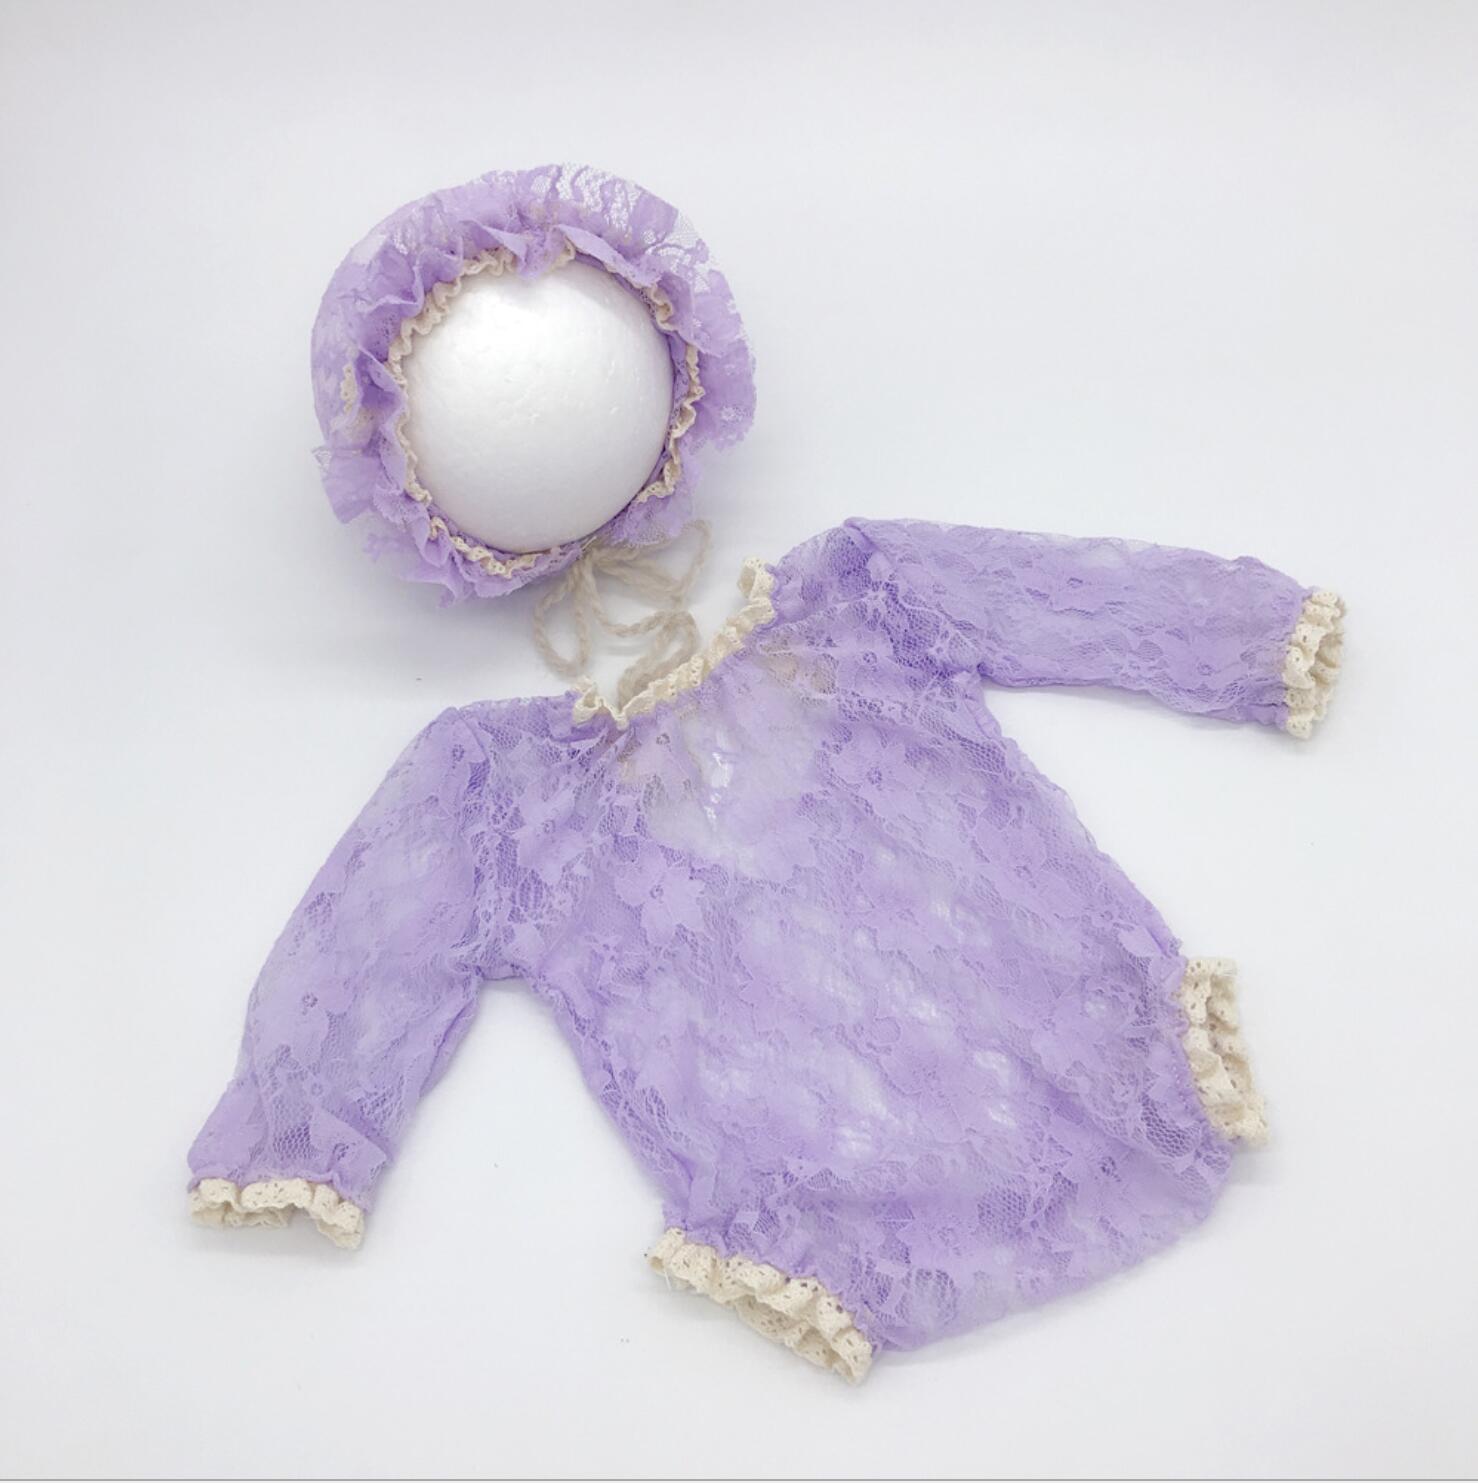 Fox 2pcs/set Lace Newborn Outfits Clothing Photoshoot - Foxbackdrop